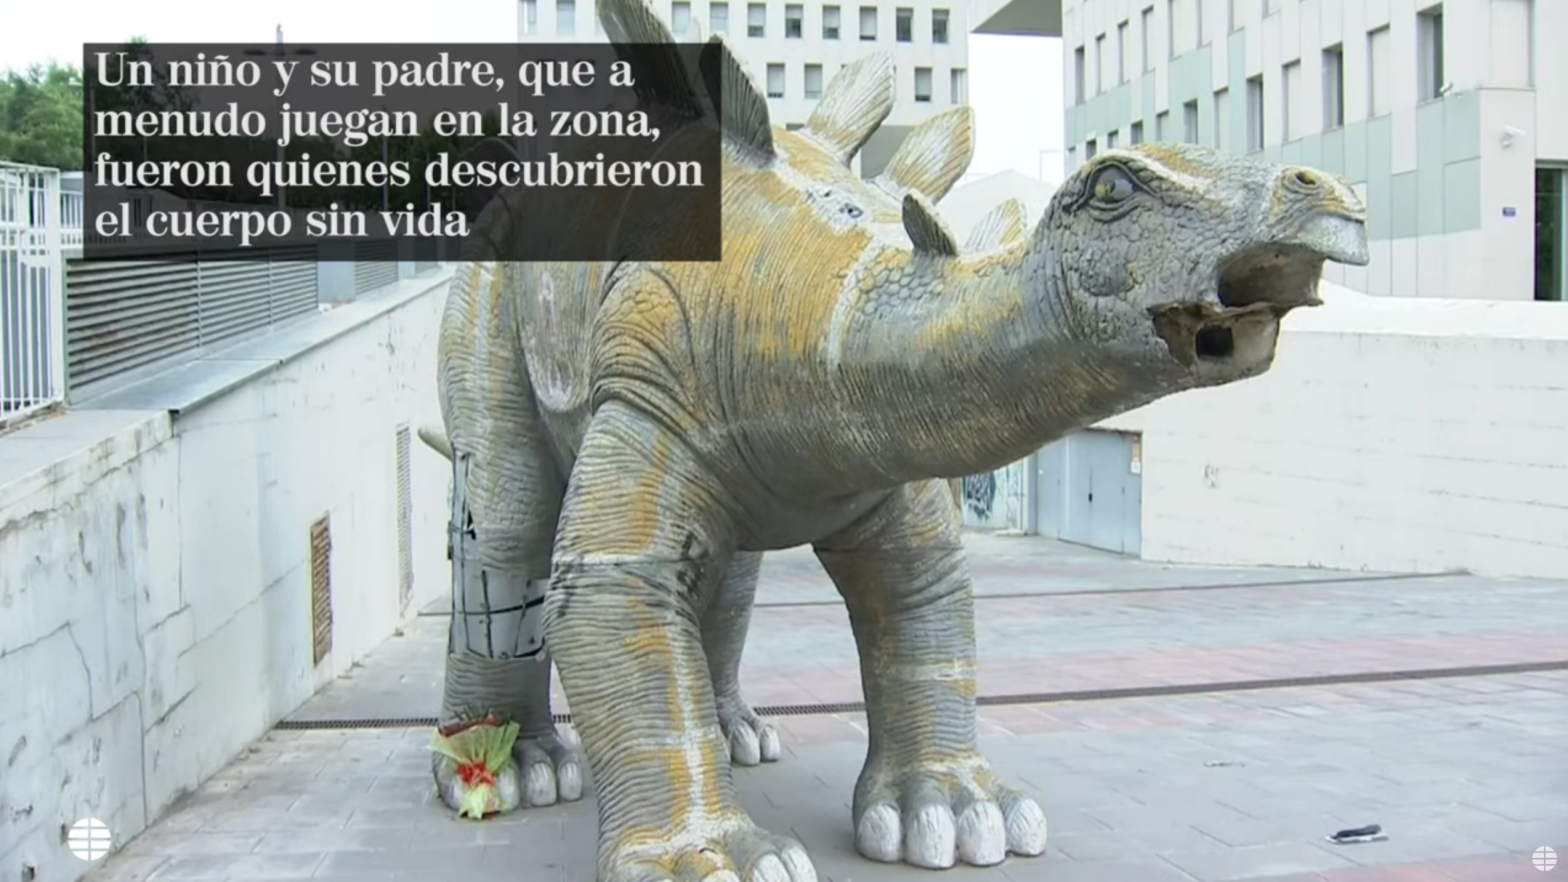 The dinosaur statue in Santa Coloma de Gramenet, Spain, where a human body was recently discovered. (Screenshot: El Mundo/YouTube, Fair Use)